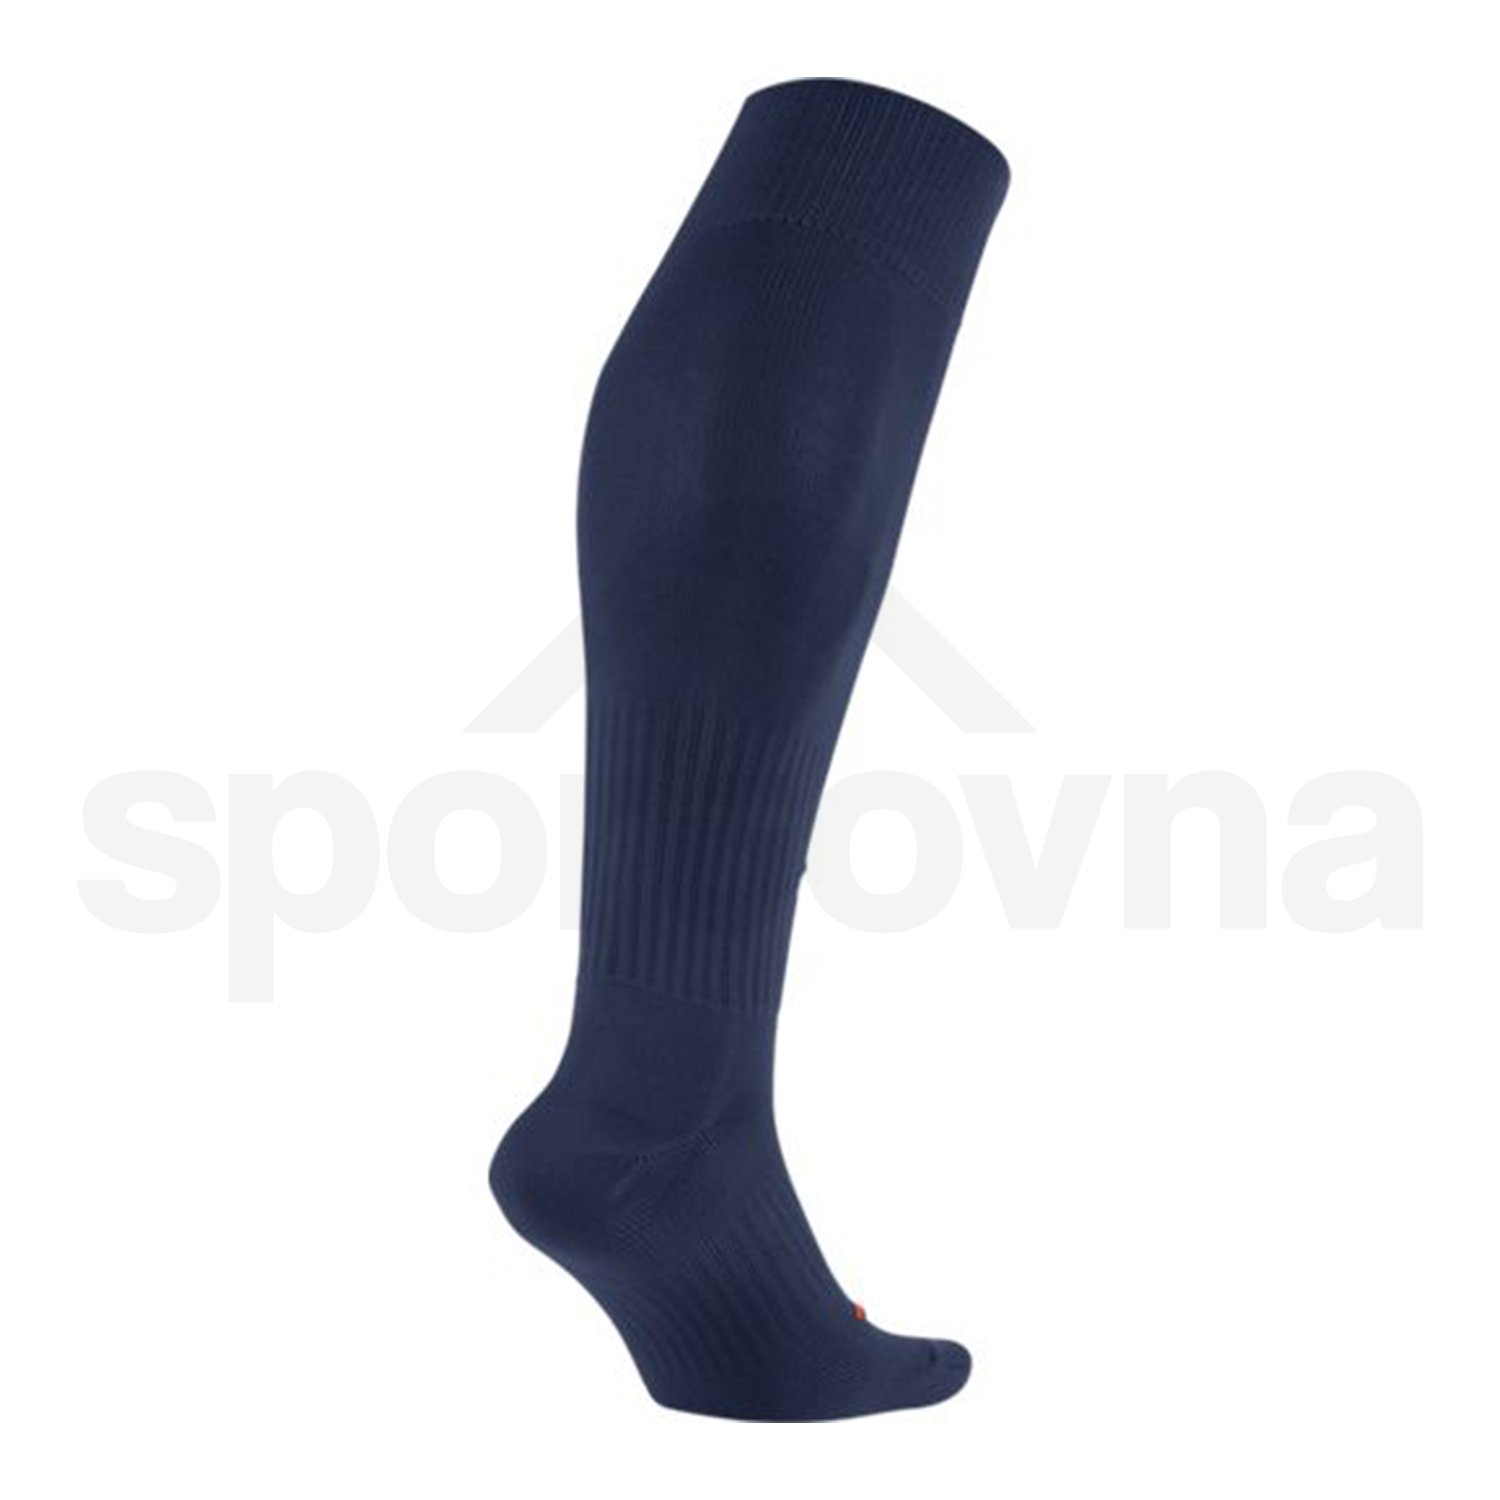 Štulpny NIKE CLASSIC FOOTBALL DRI-FIT SMLX - tmavě modrá